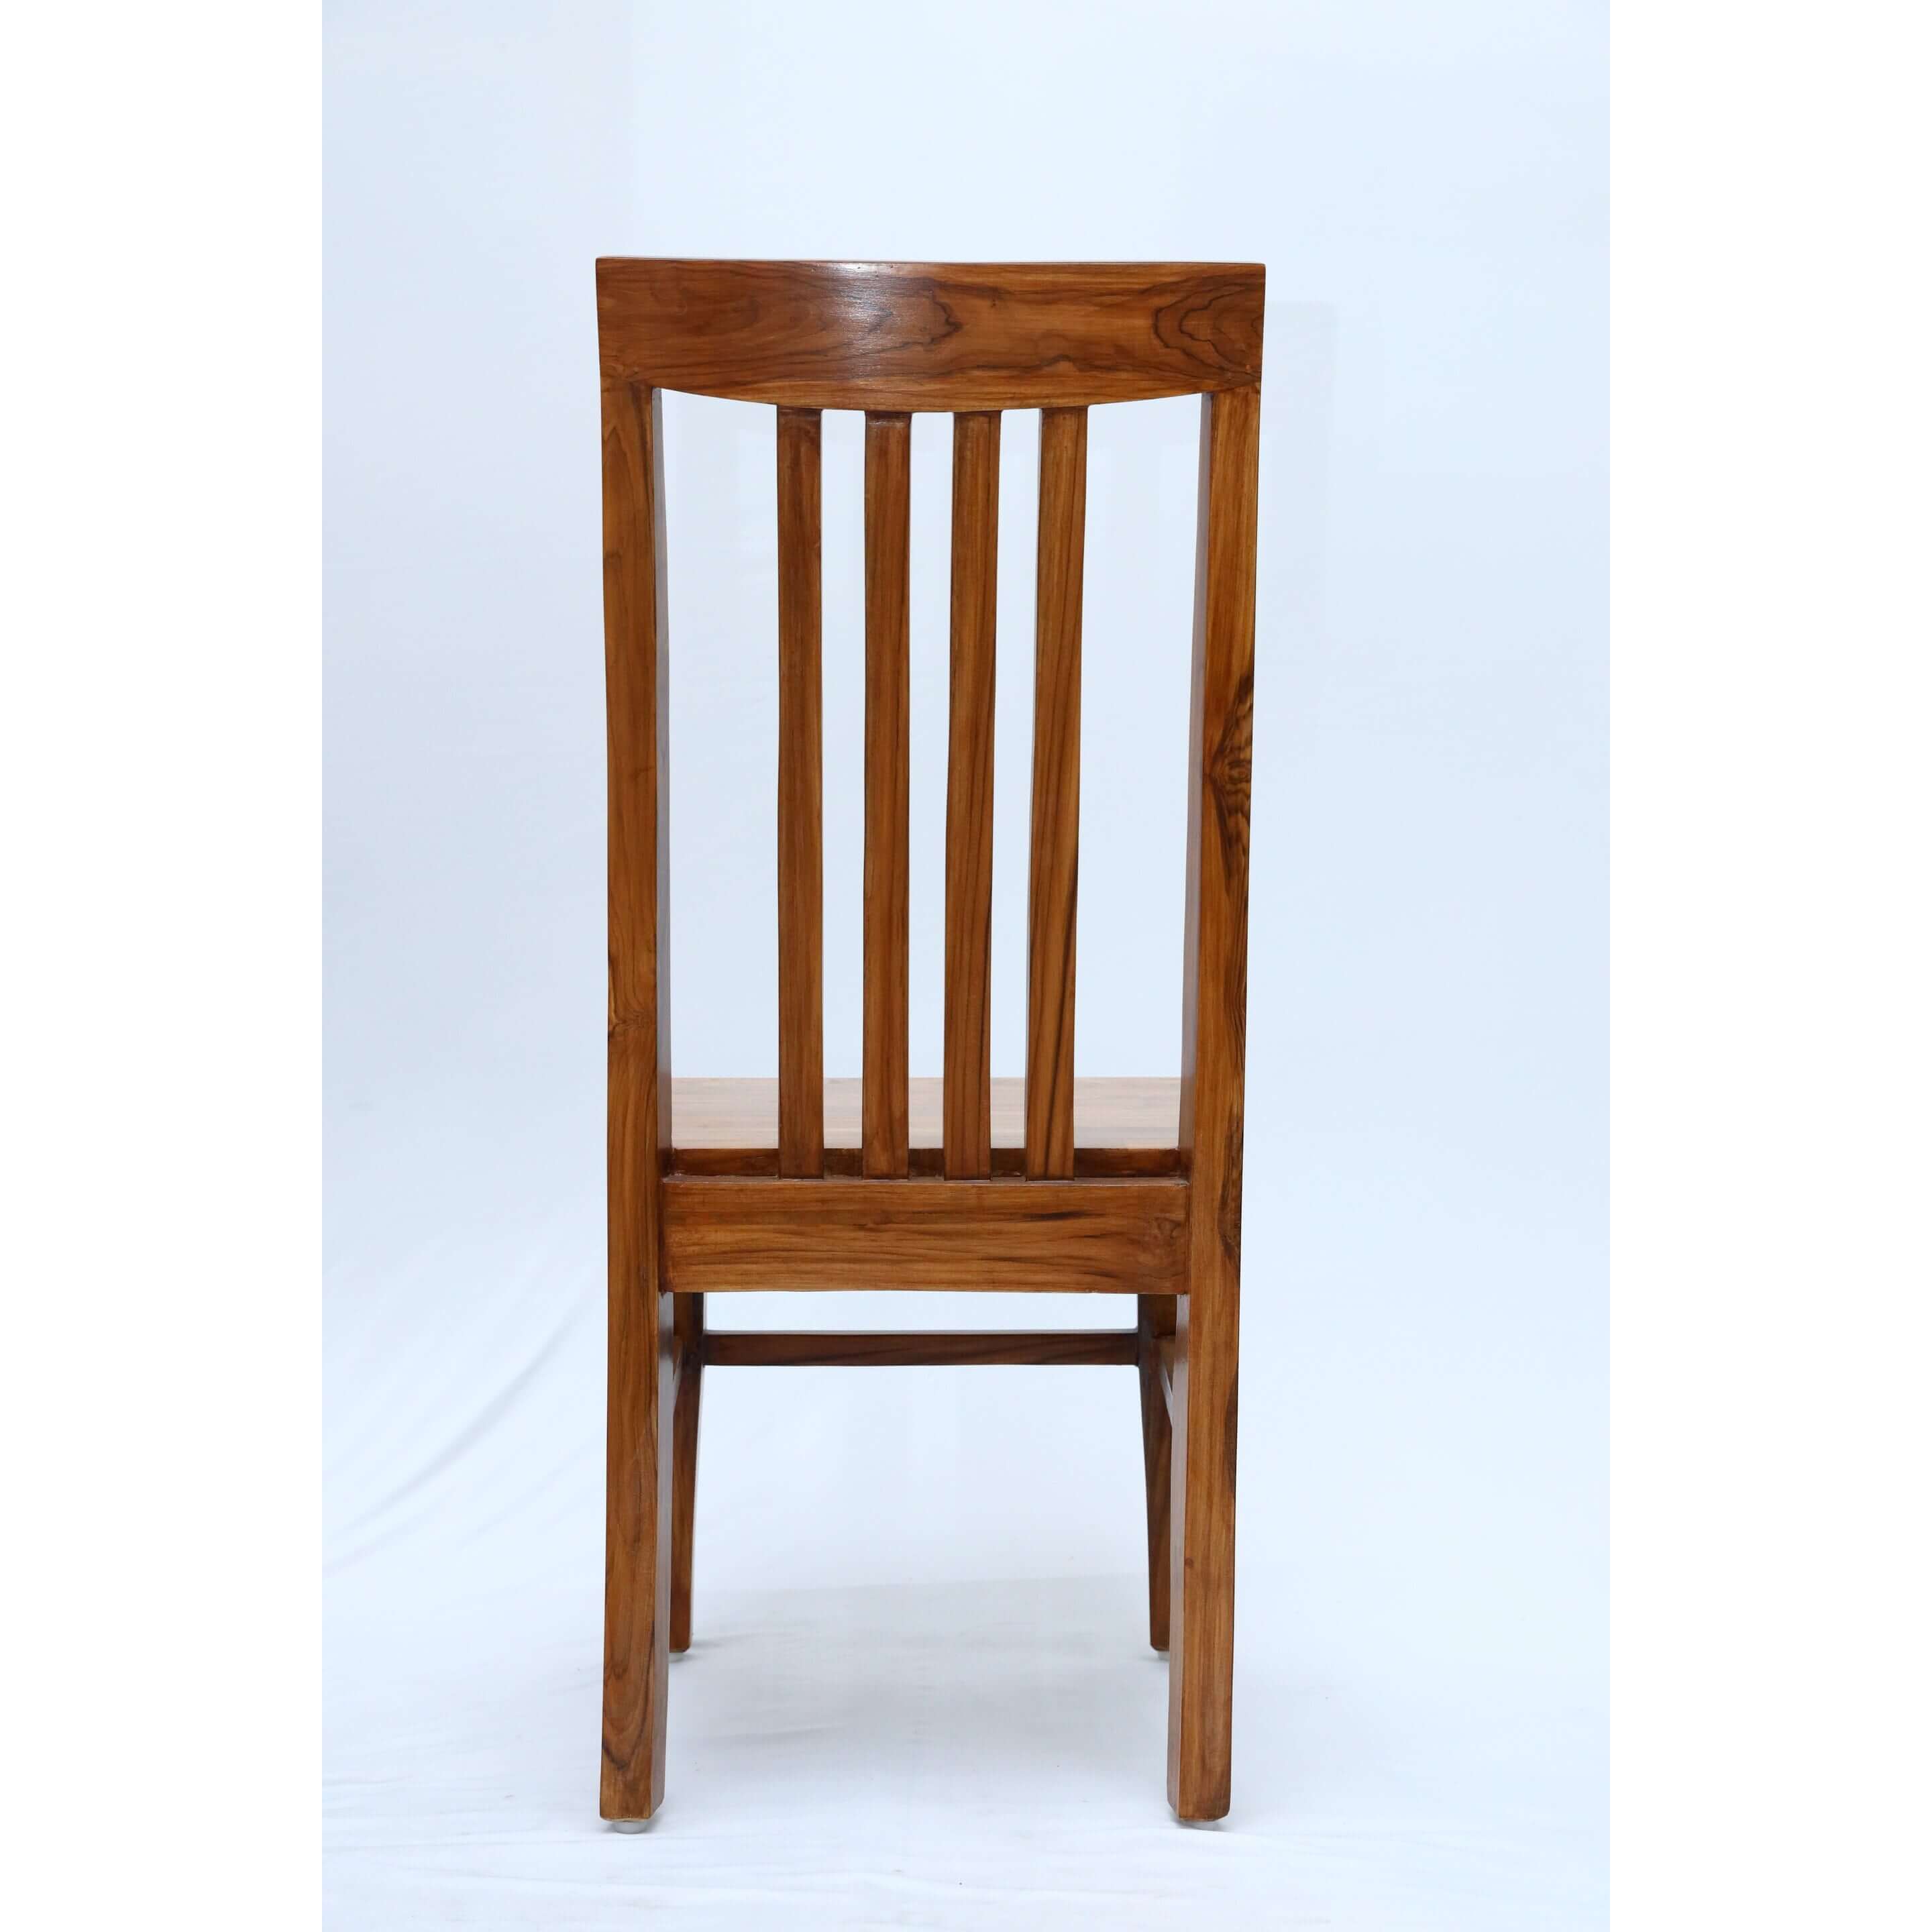 Teak wood dining chair TCH-1601